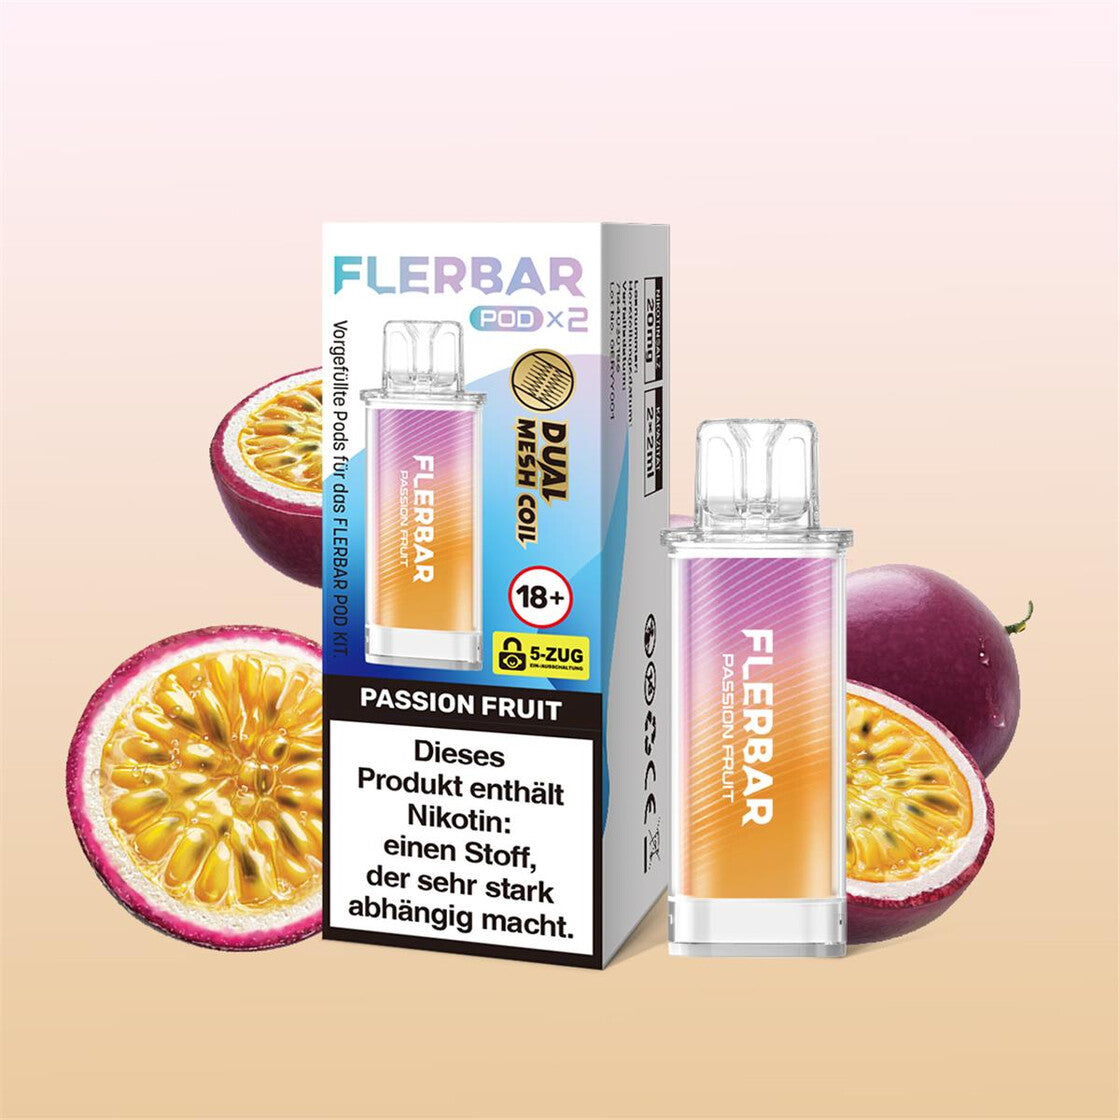 Flerbar Pod Passion Fruit